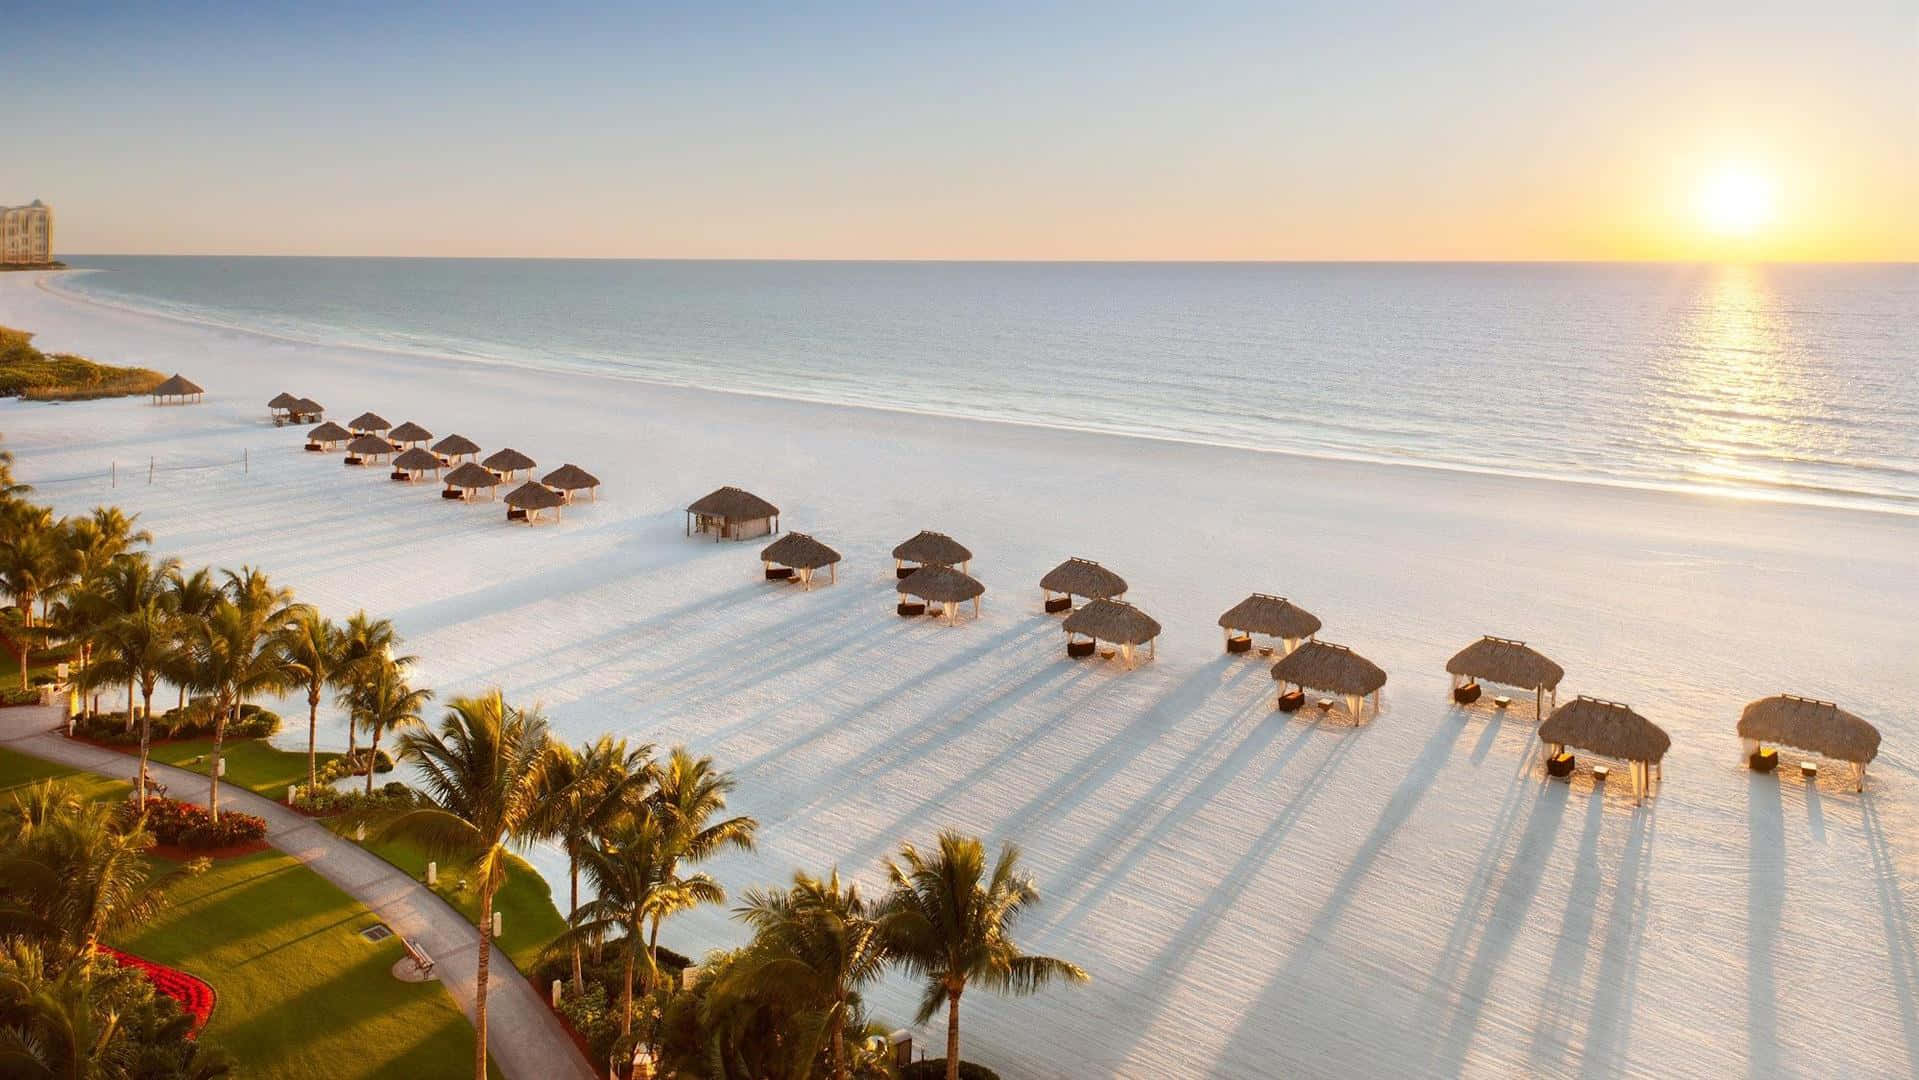 Marcoisland, Florida - Un Vibrante Paradiso Di Spiagge Baciata Dal Sole E Acque Turchesi